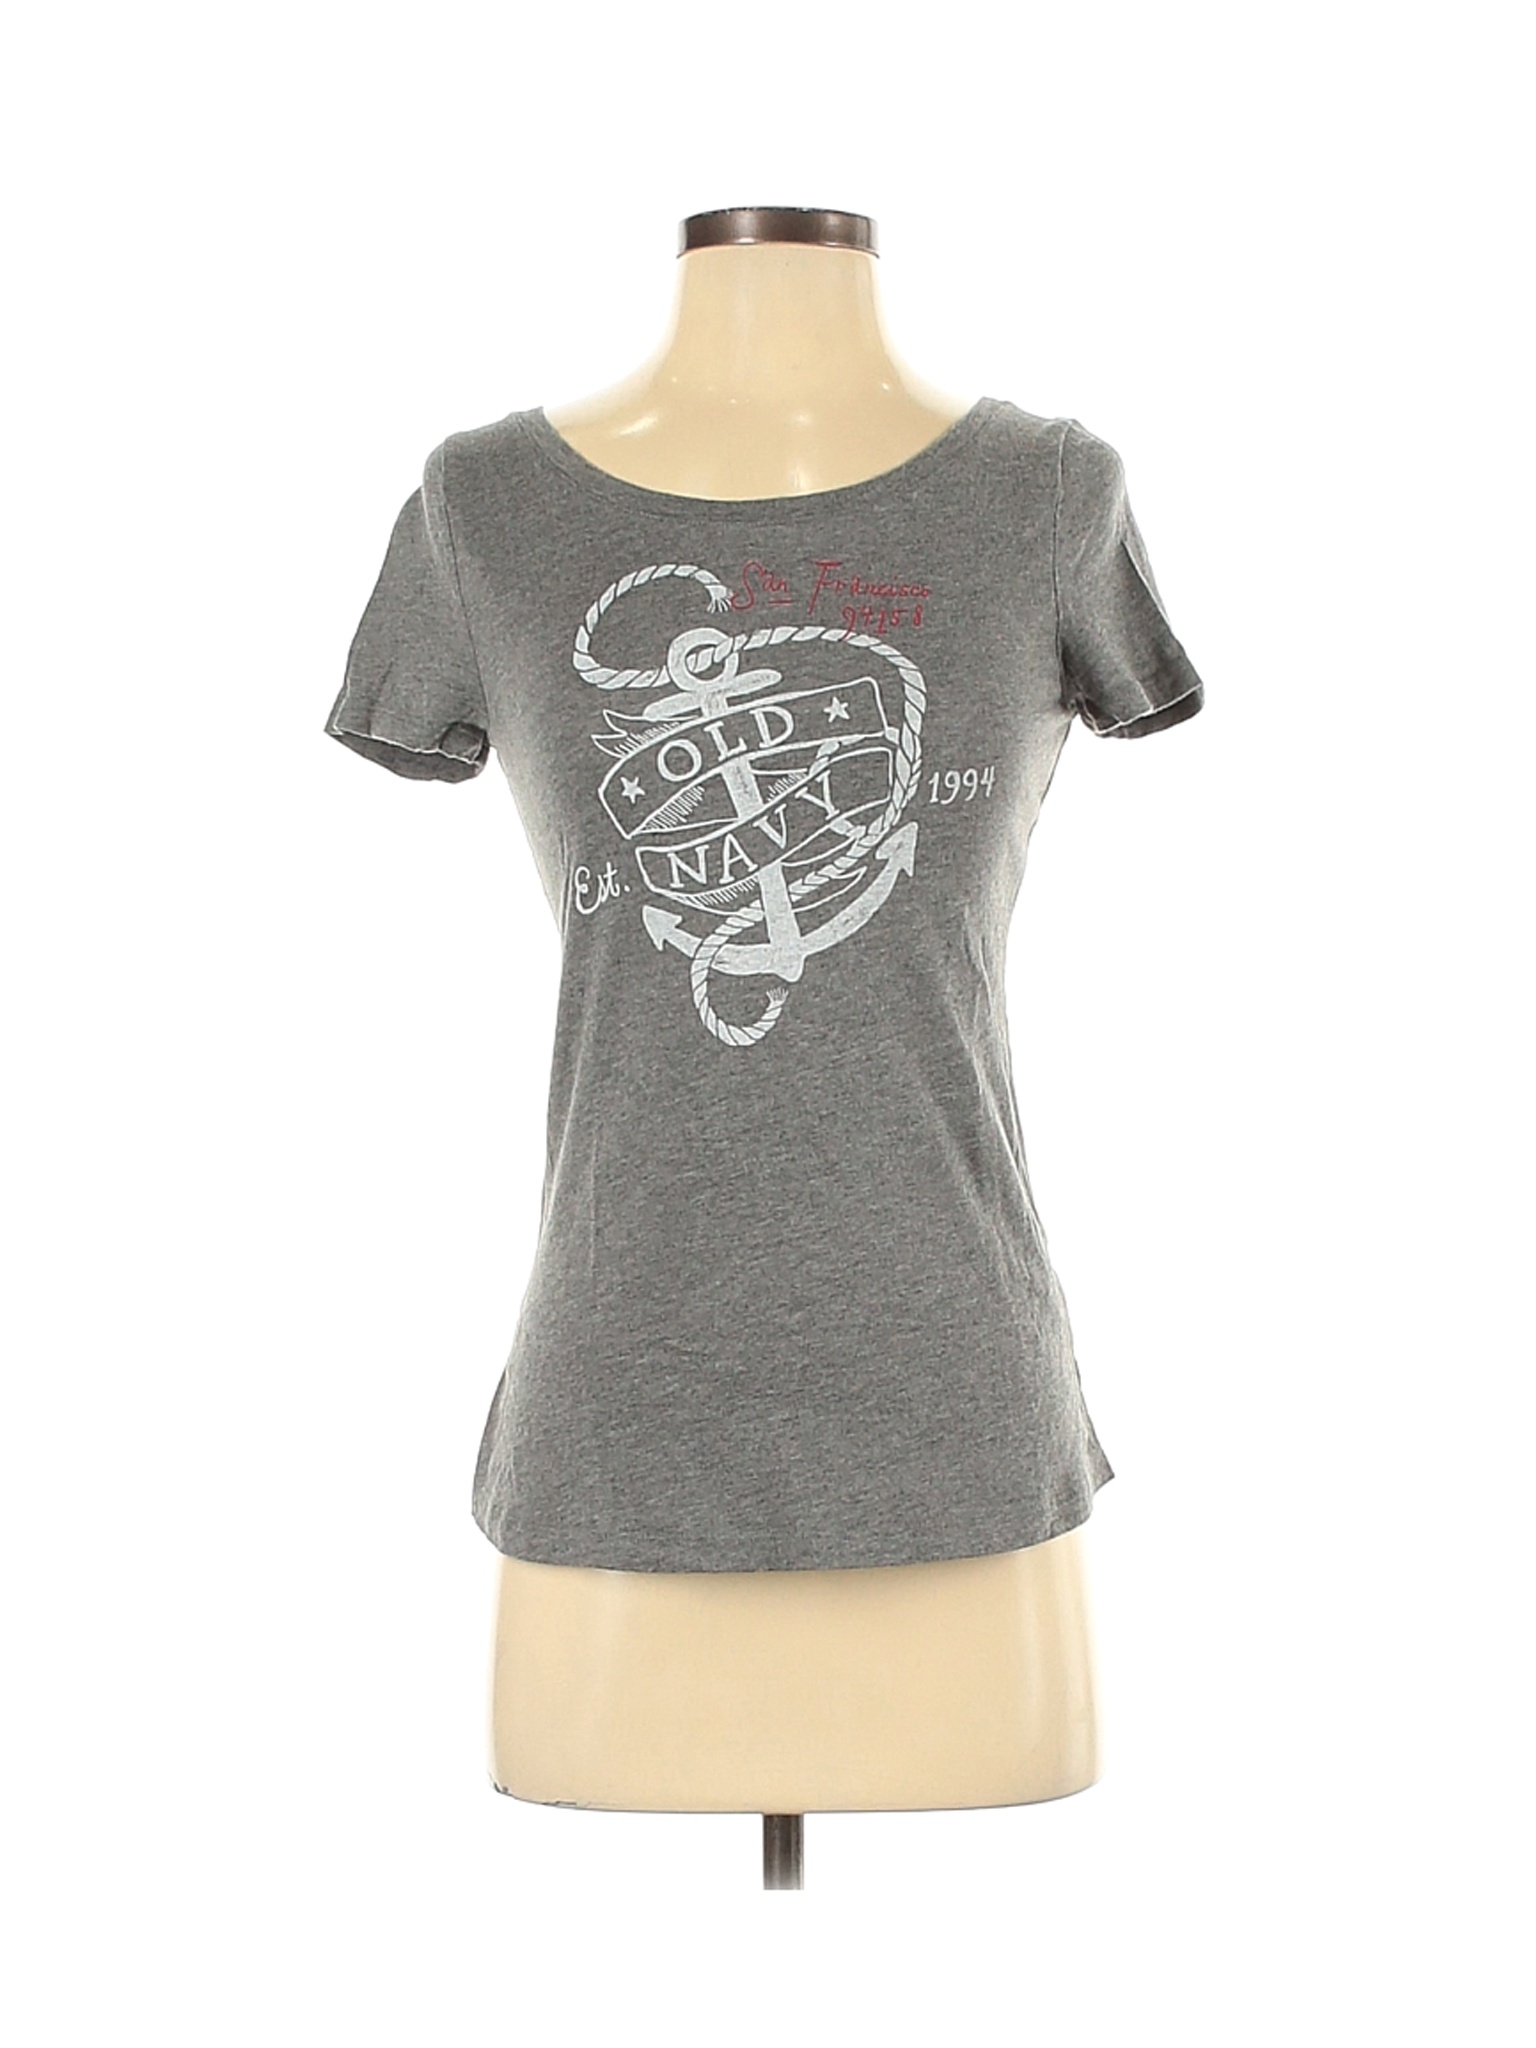 Old Navy Women Gray Short Sleeve T-Shirt XS | eBay